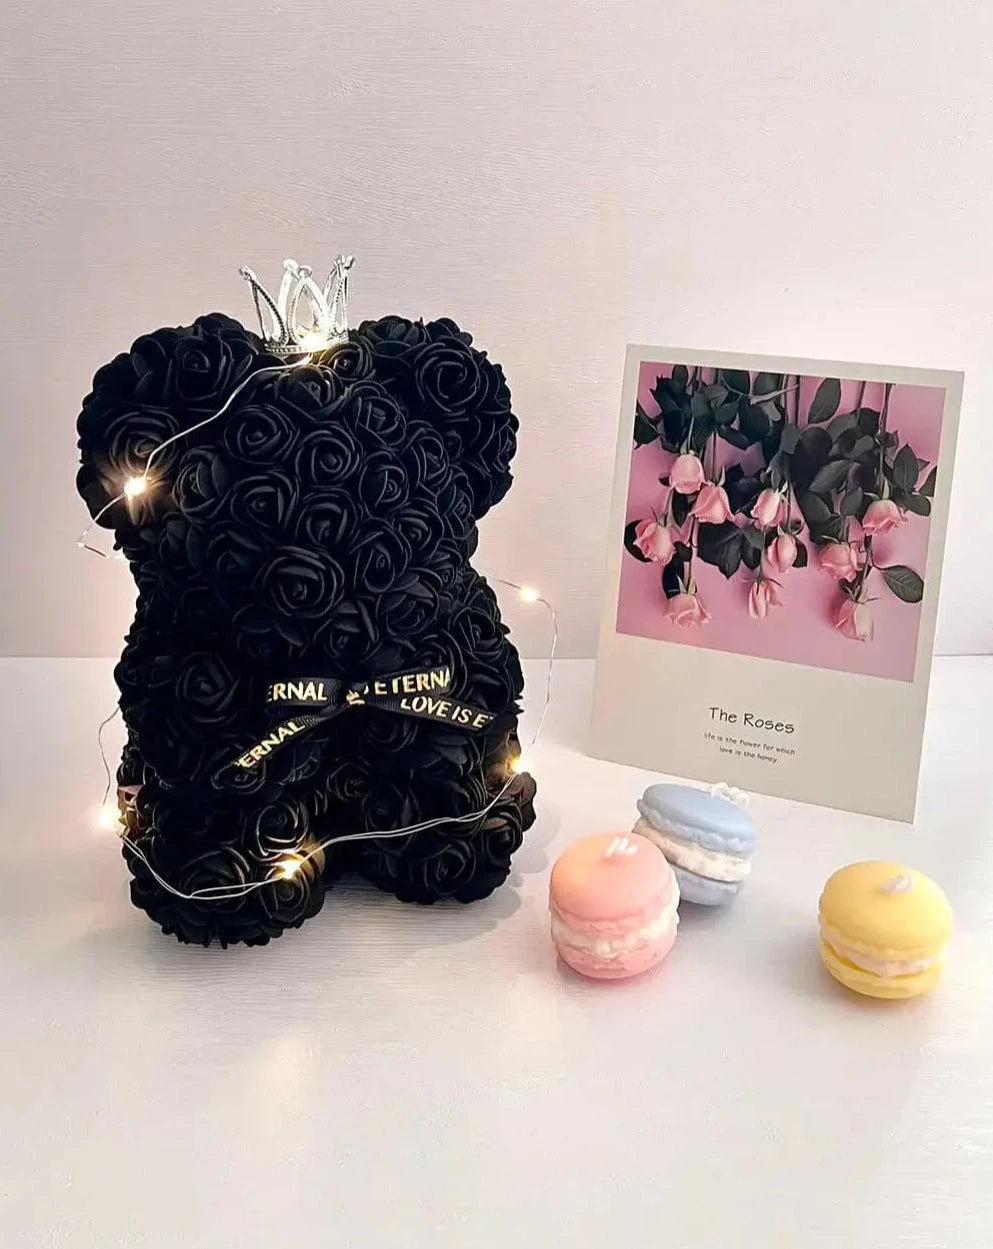 25cm Black Rose Bear with Fairy Lights The Rose Ark